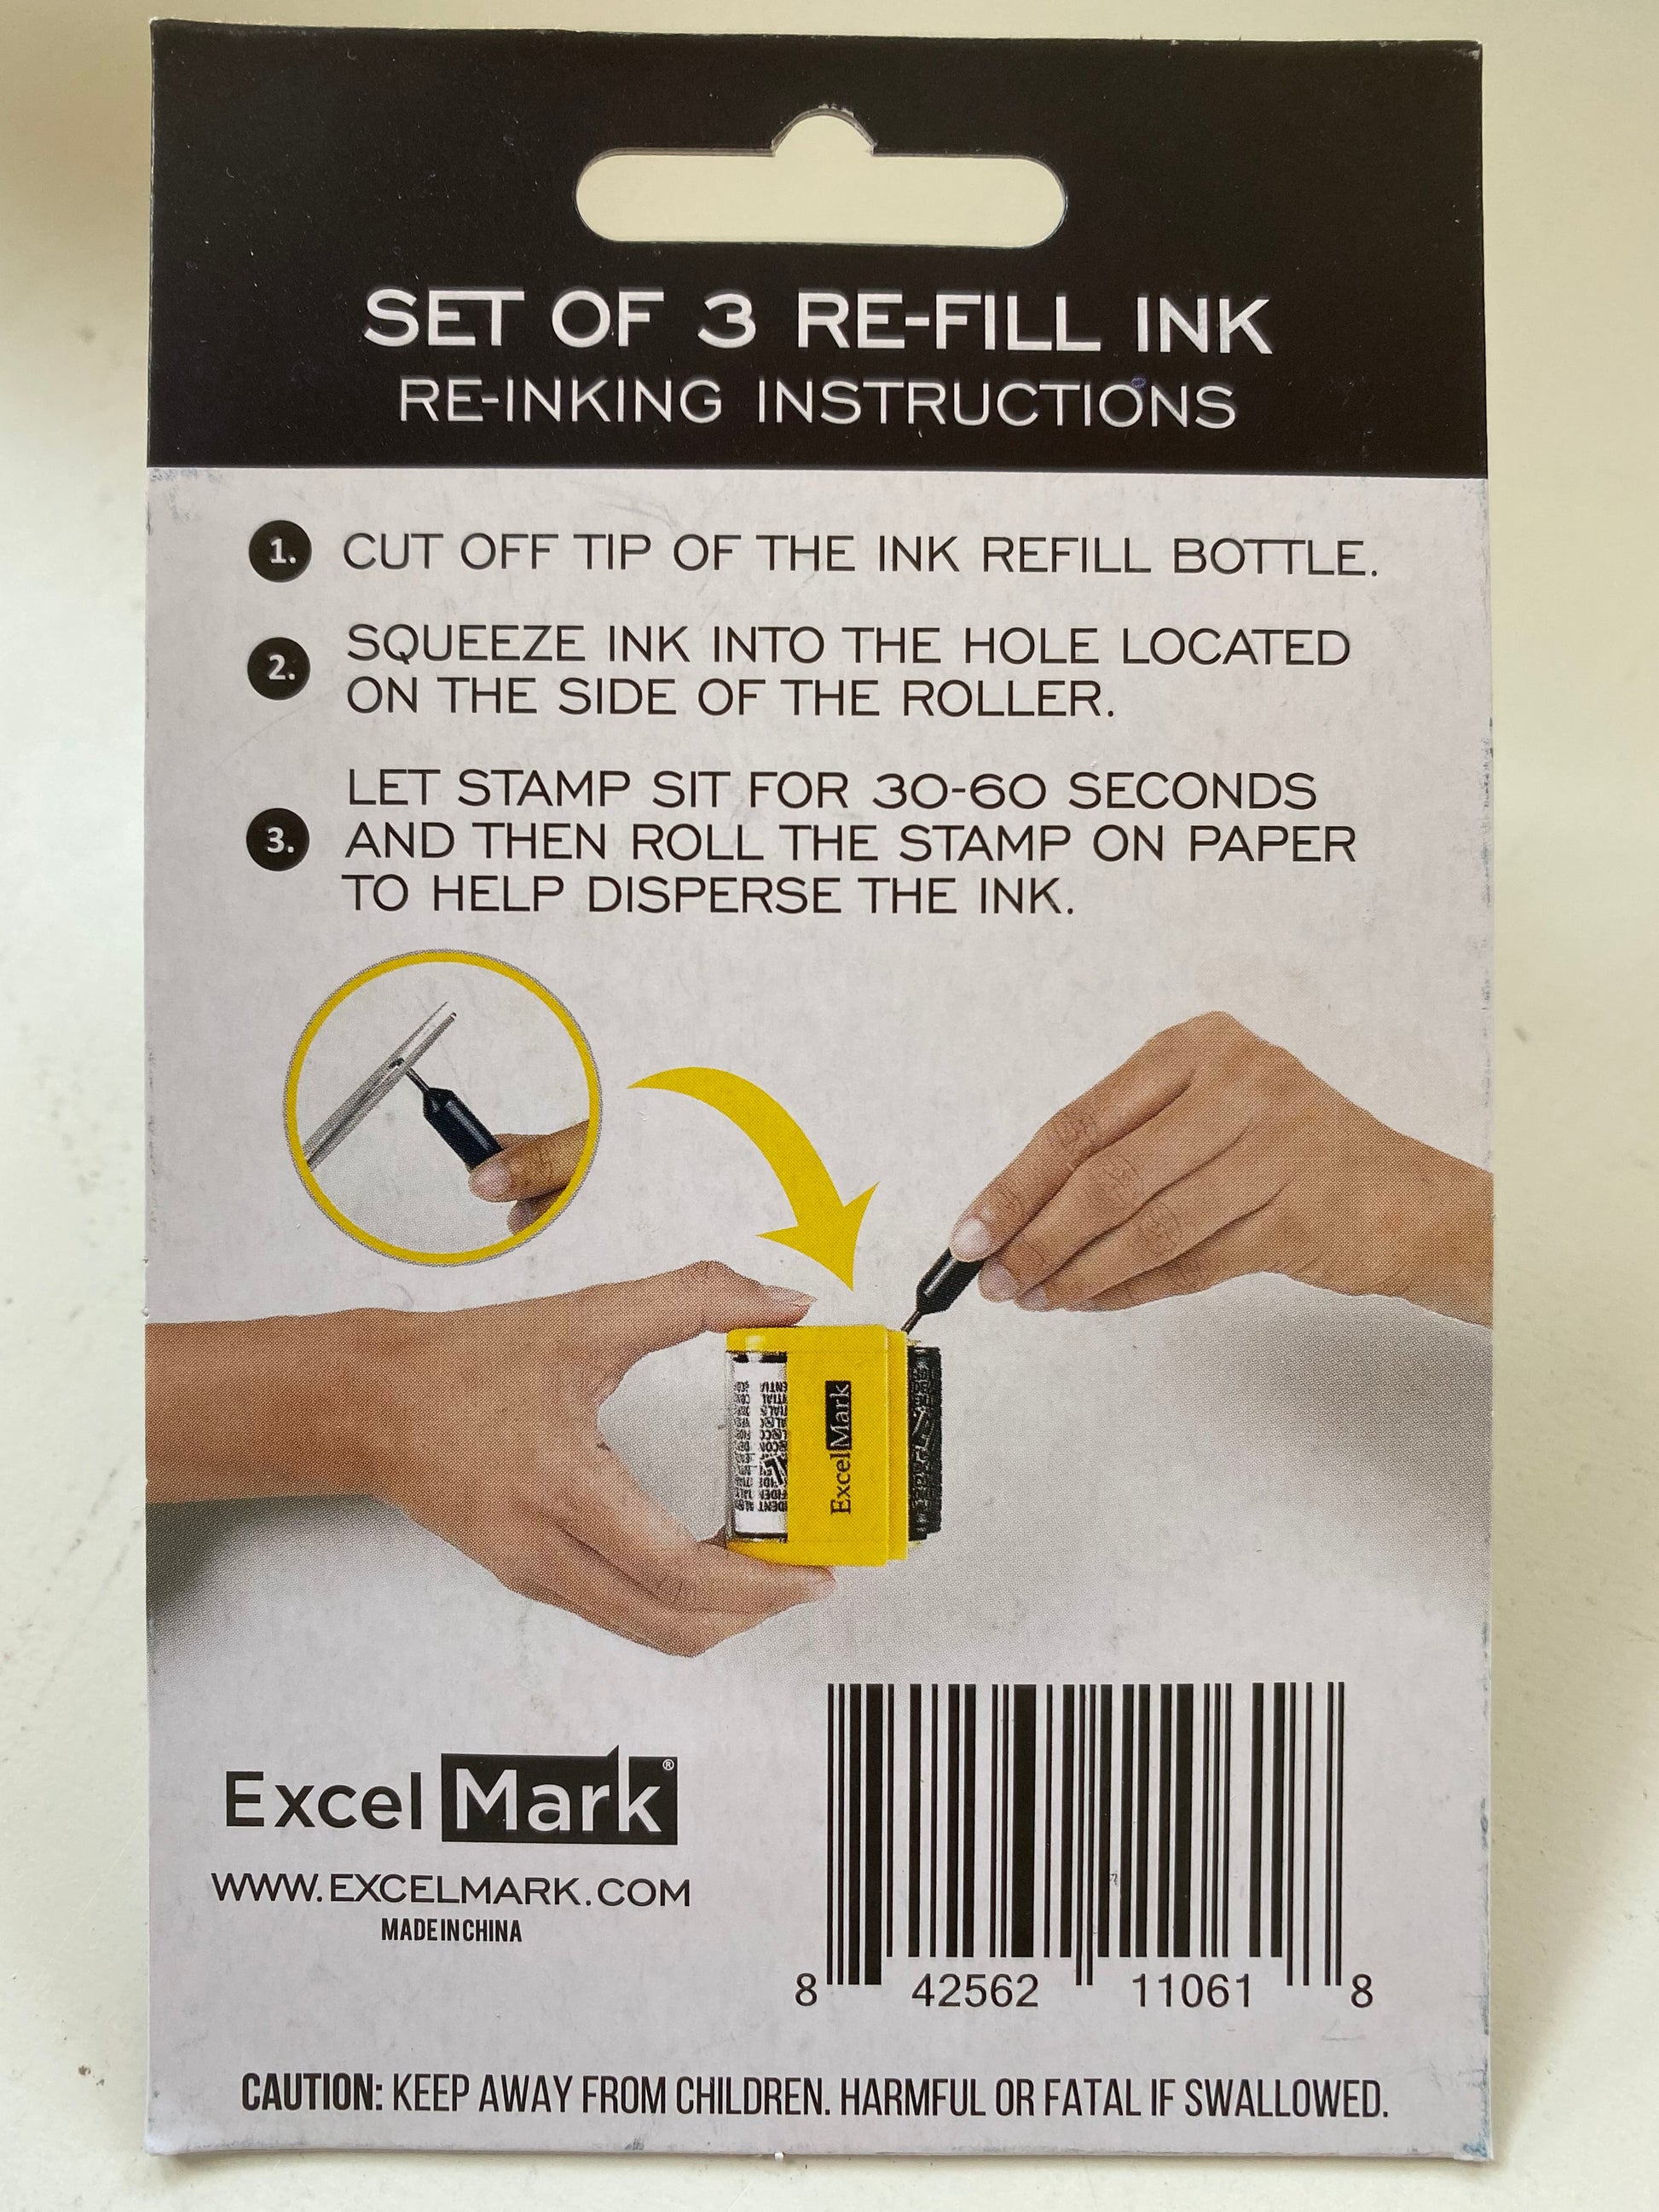 LegiLiner Roller Stamp Ink Refill Pods-Small (0.5 ml)-Pack of 3